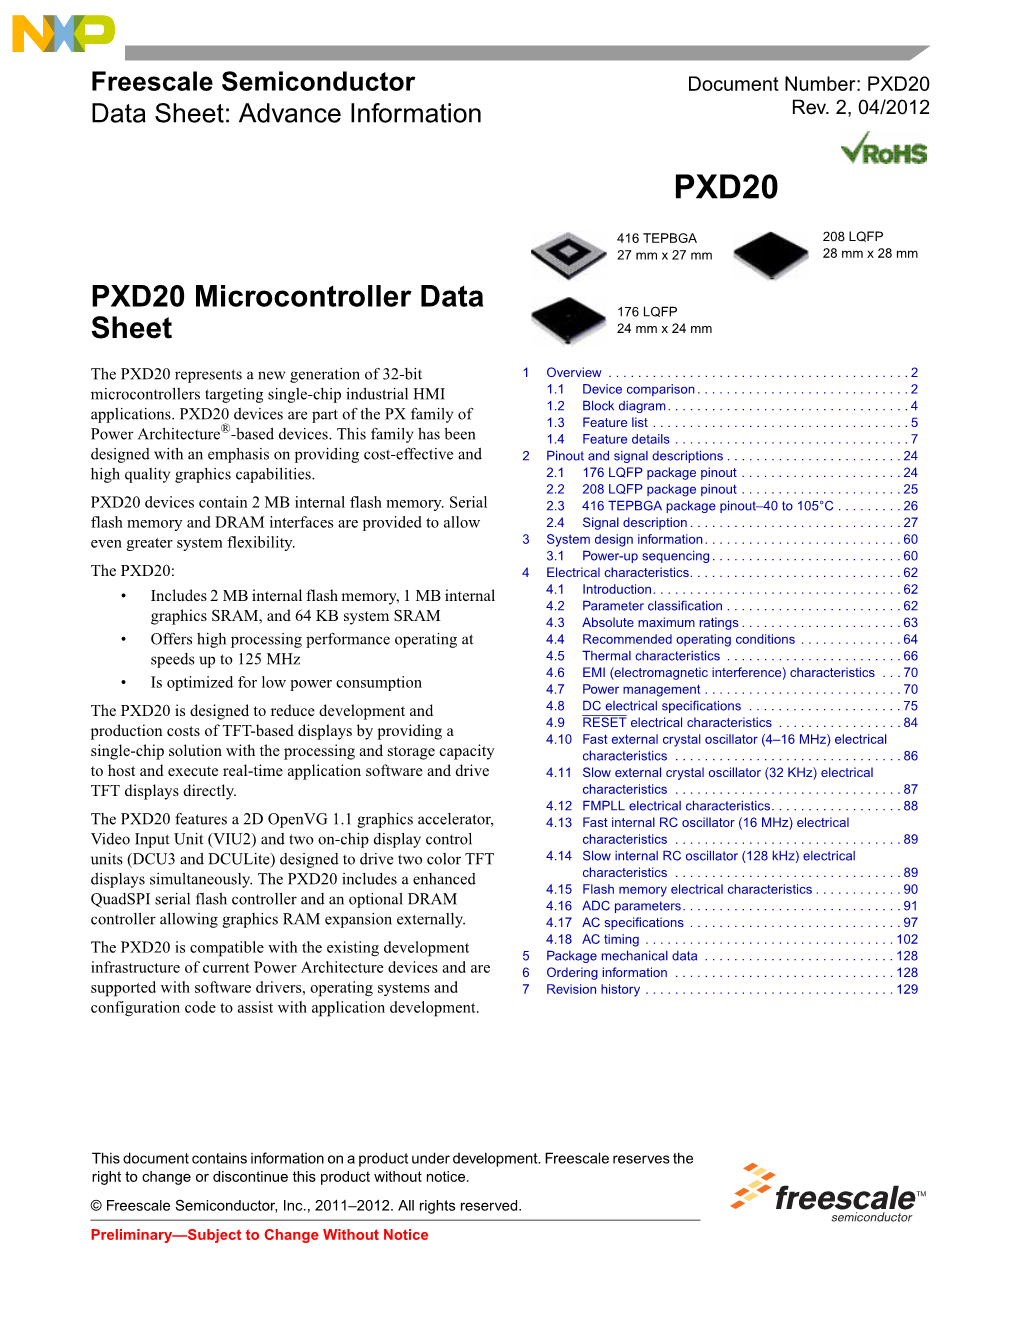 MPC5645S/SC667108 Microcontroller Data Sheet